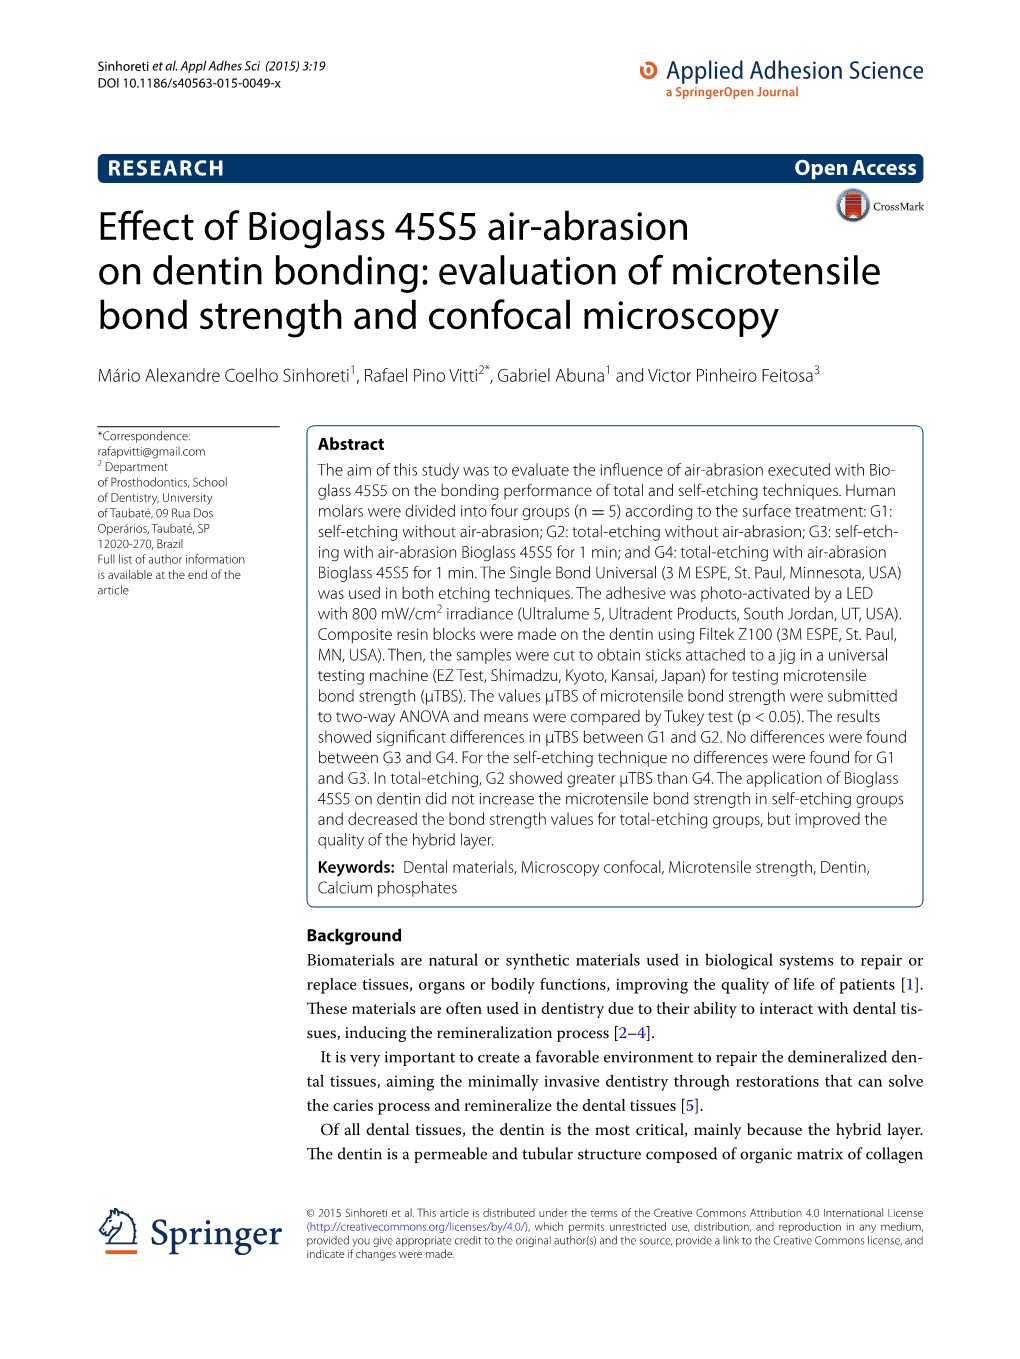 Effect of Bioglass 45S5 Air-Abrasion On